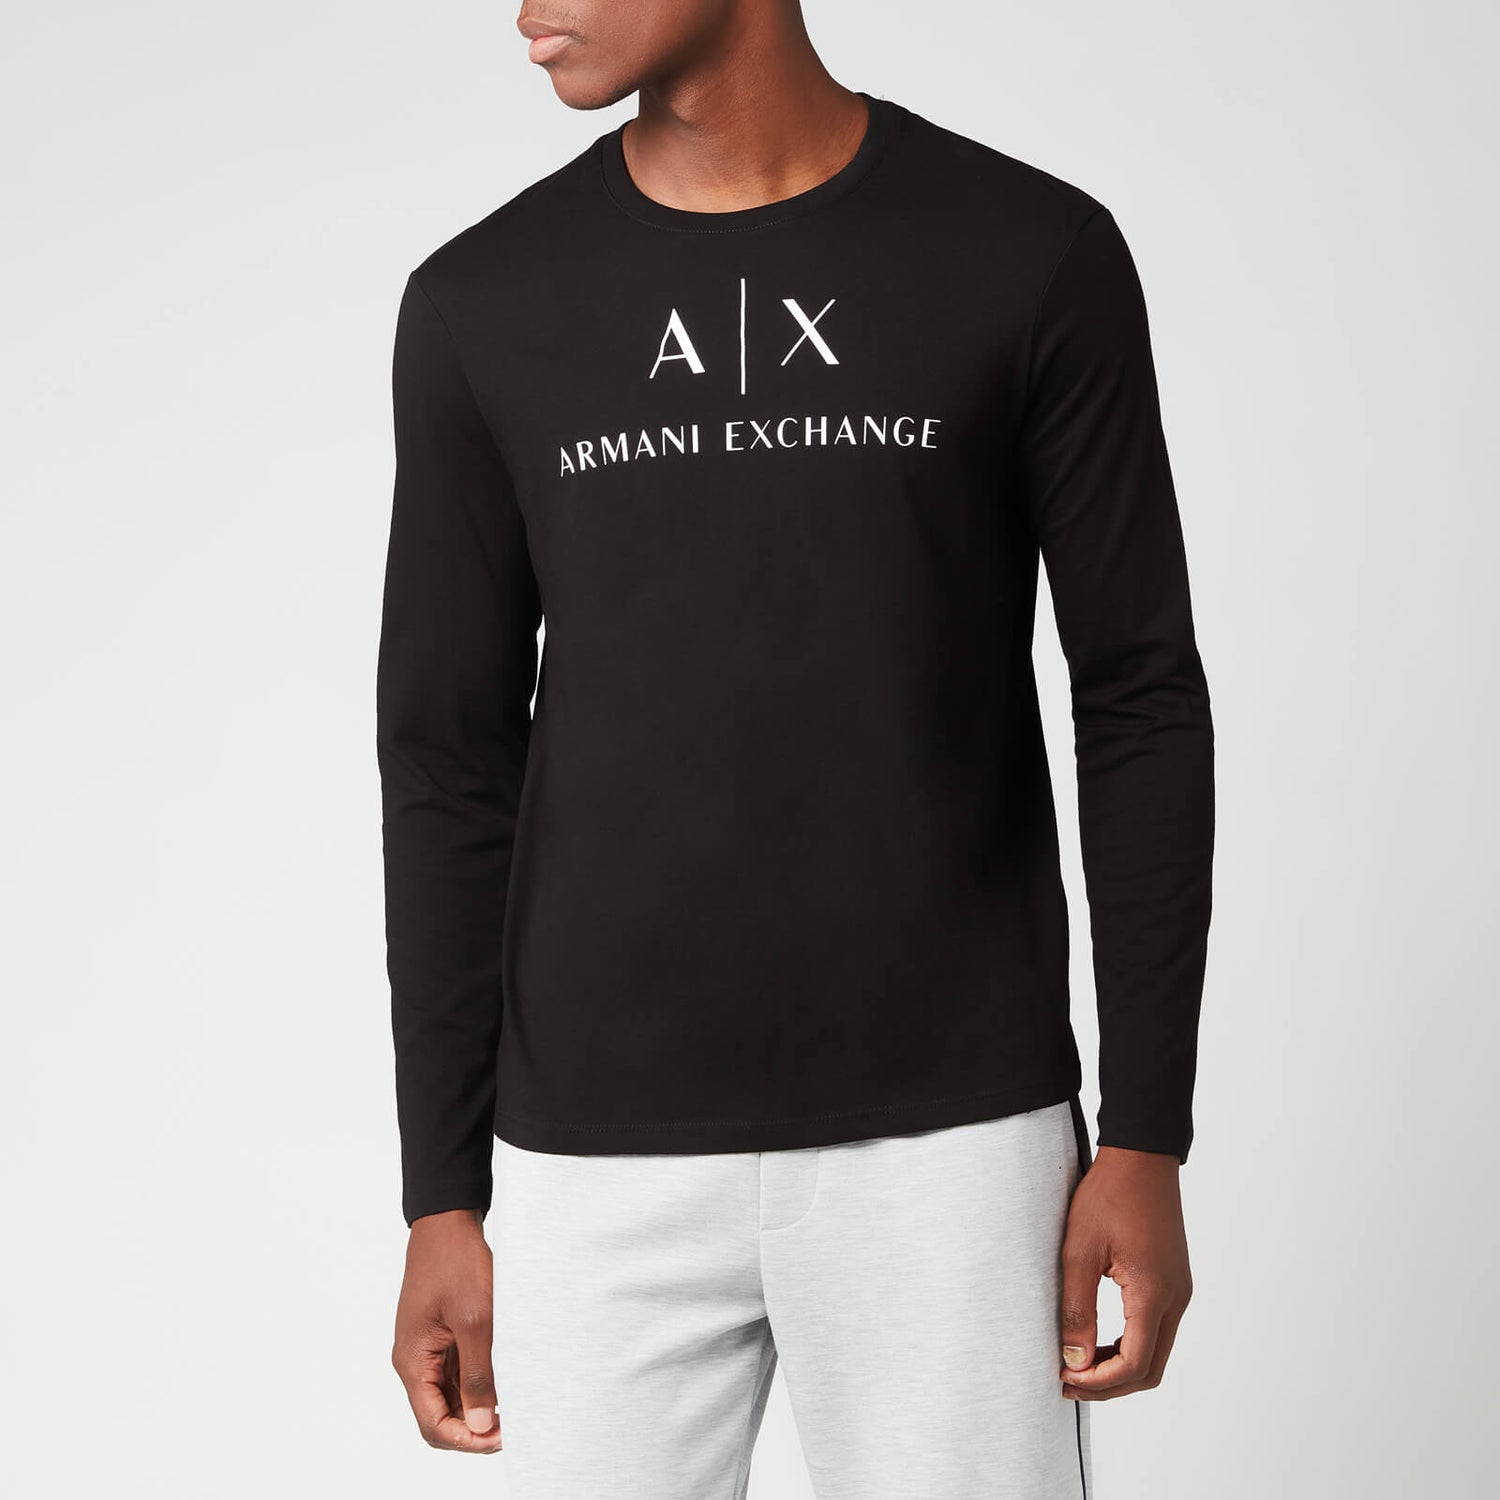 Armani Exchange Men's AX Logo Long Sleeve T-Shirt - Black - S